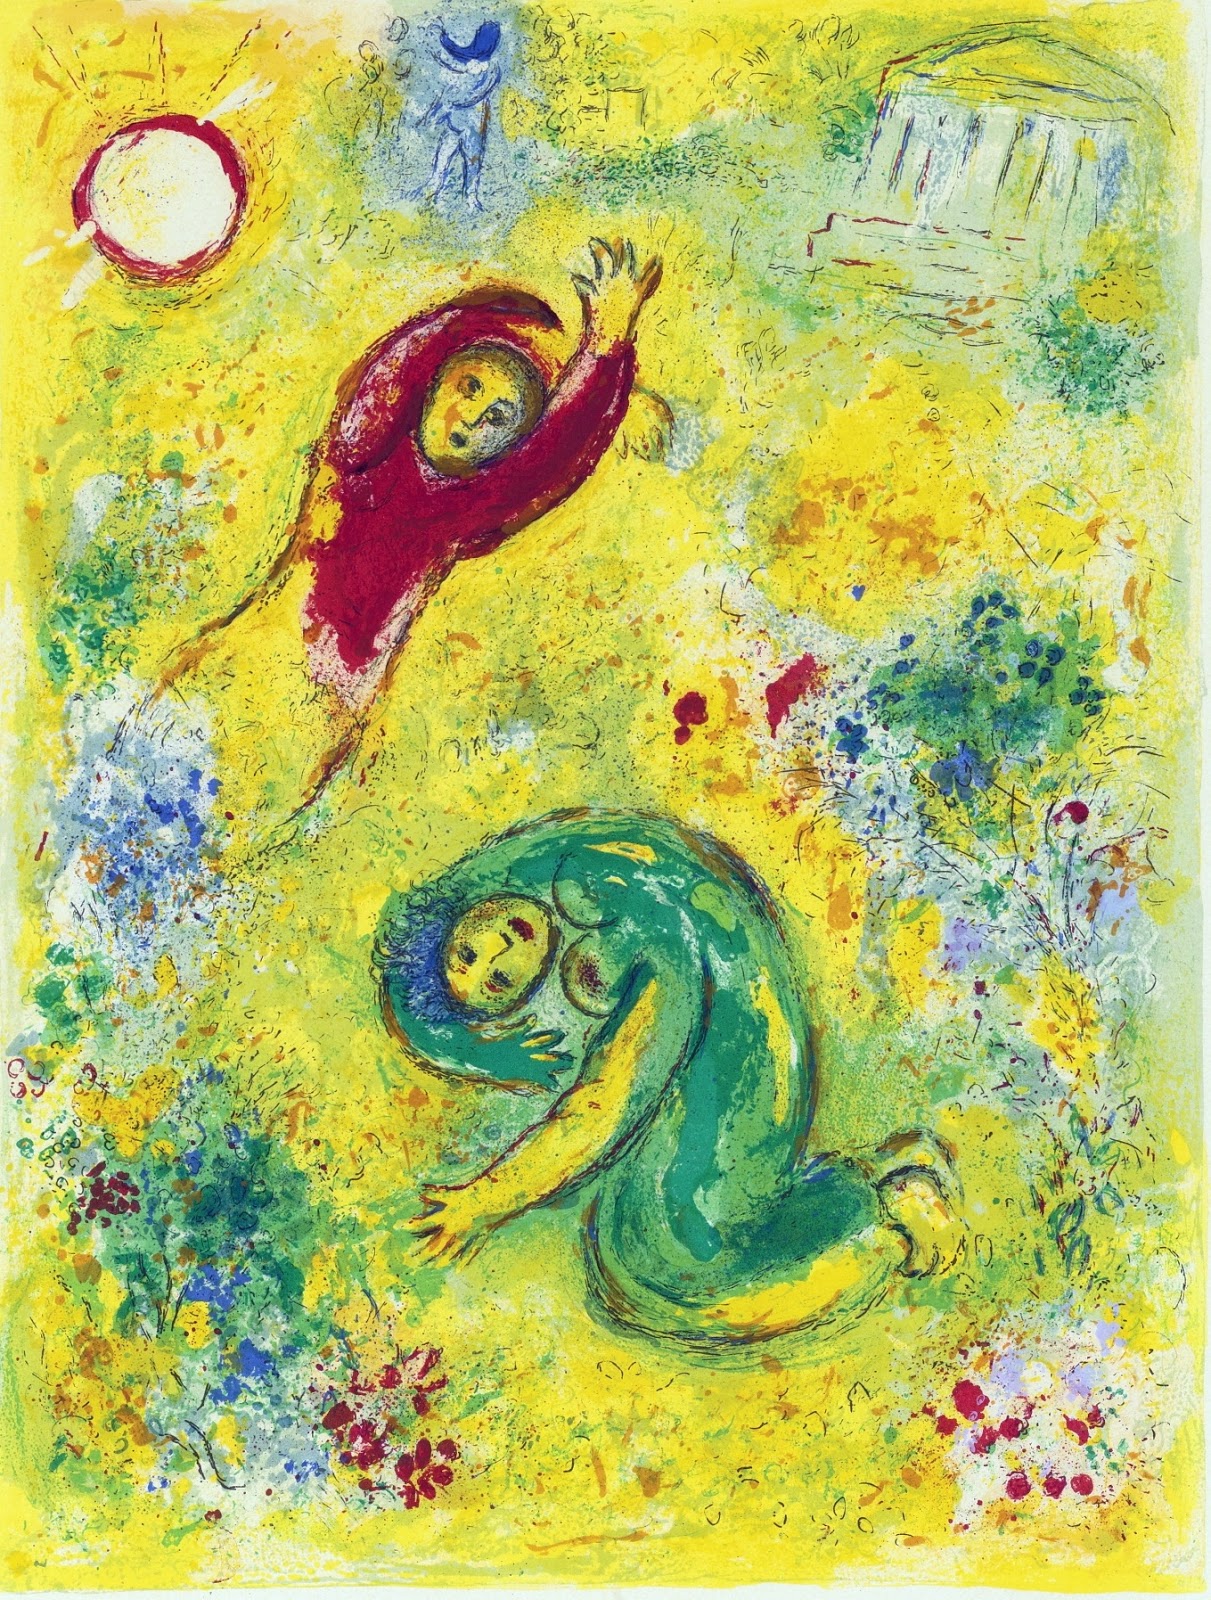 Marc+Chagall-1887-1985 (231).jpg